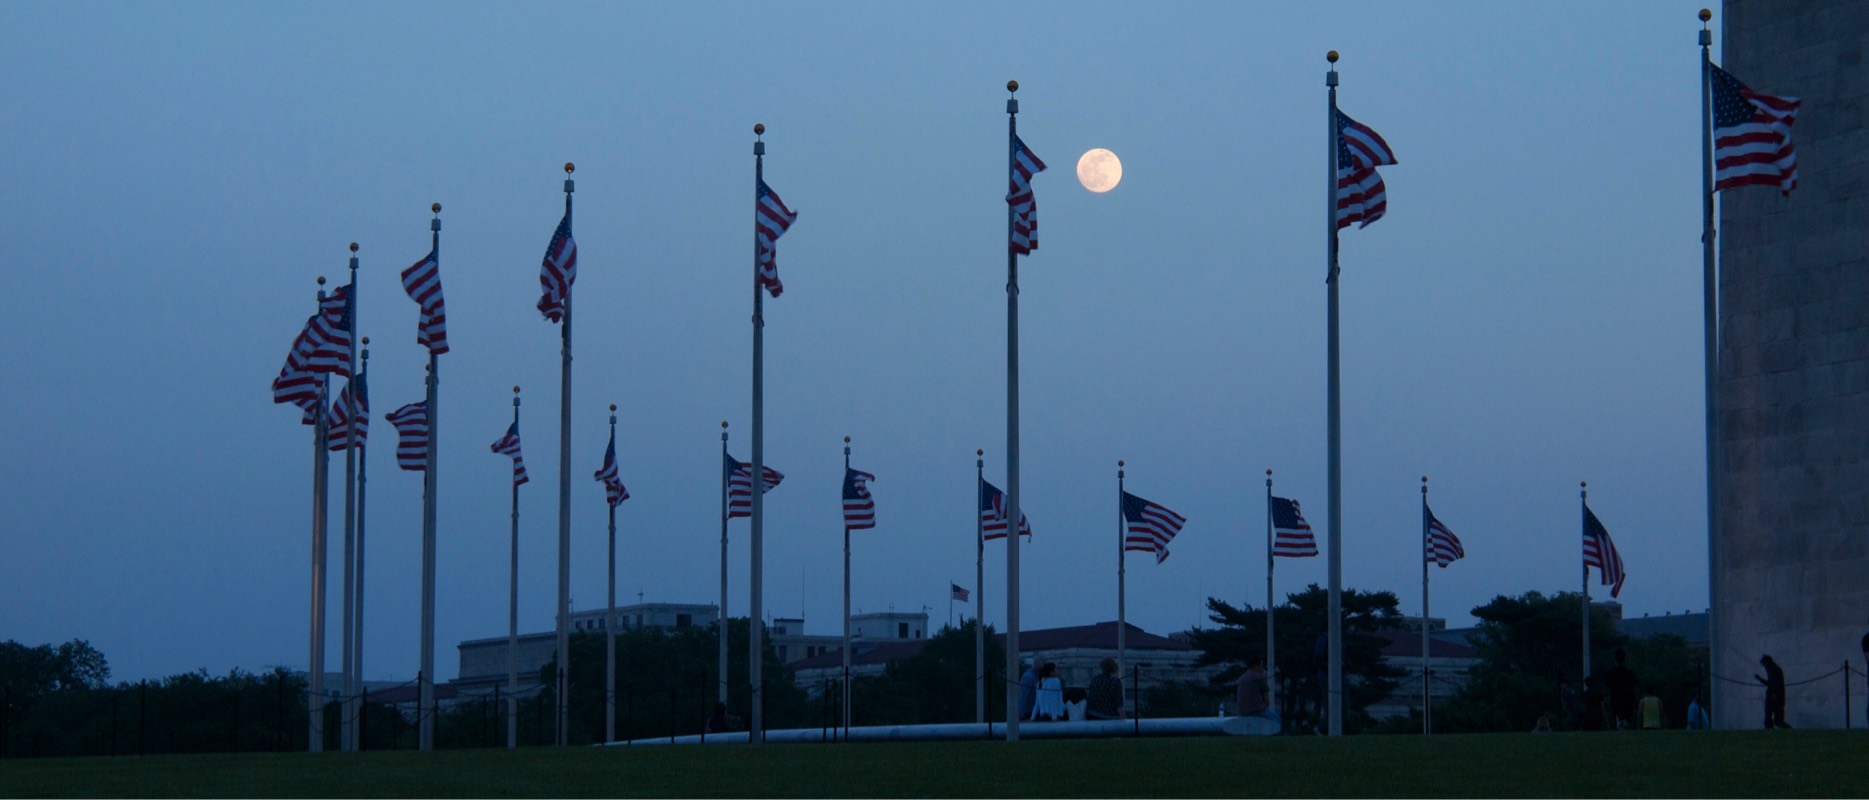 Washington Monument flags: Flags around the Washington Monument, and a full moon.; American flag; George Washington